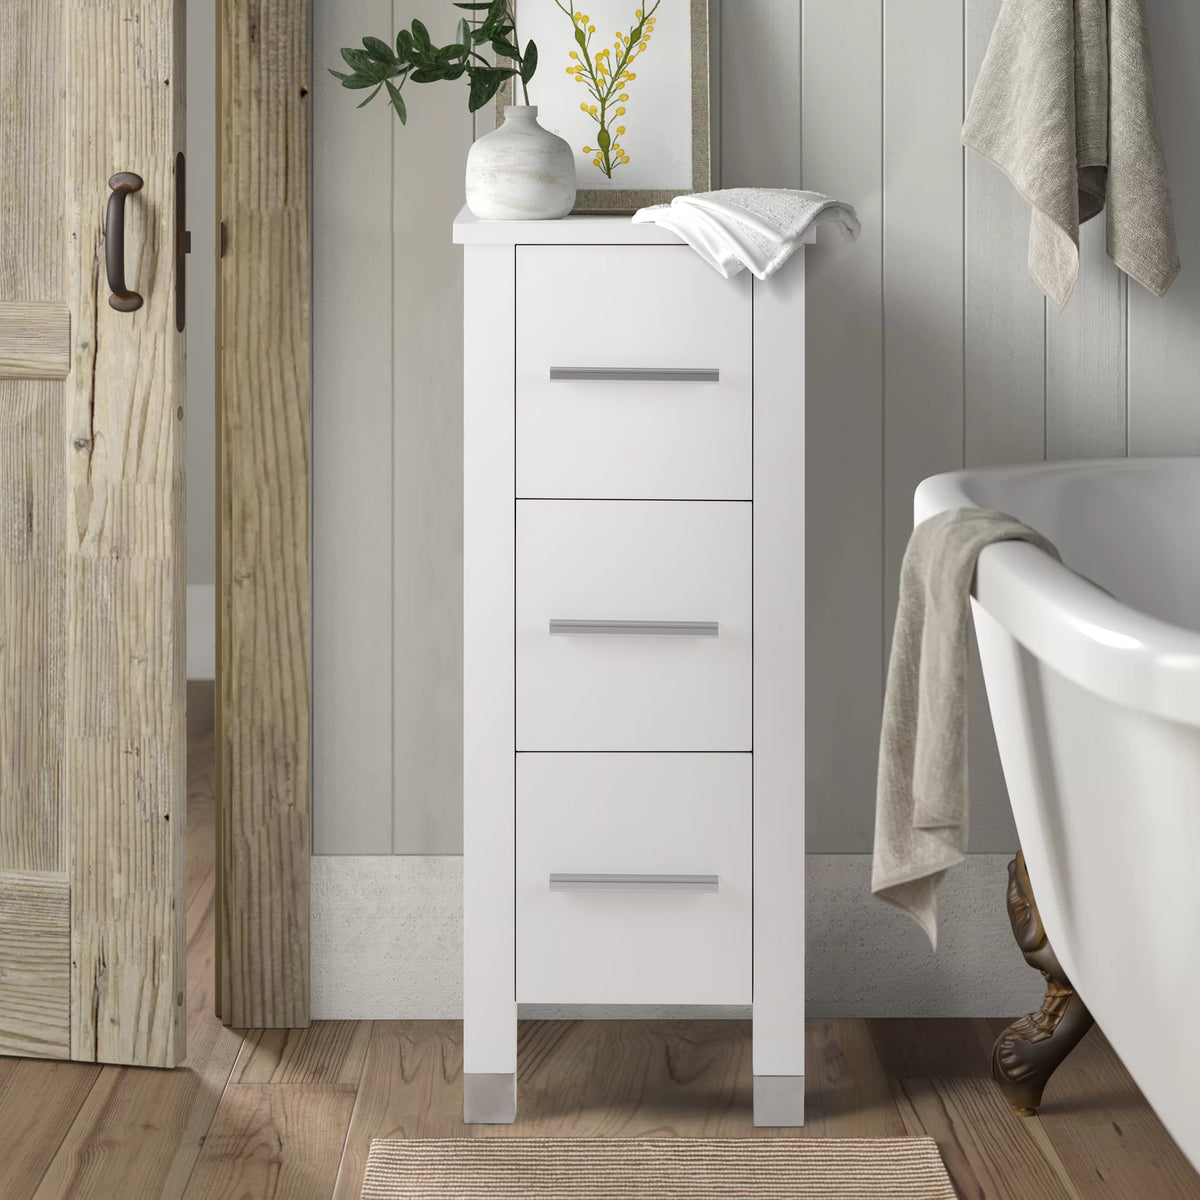 Classic 12" Freestanding Bathroom Storage Organizer with 3 Drawers—White